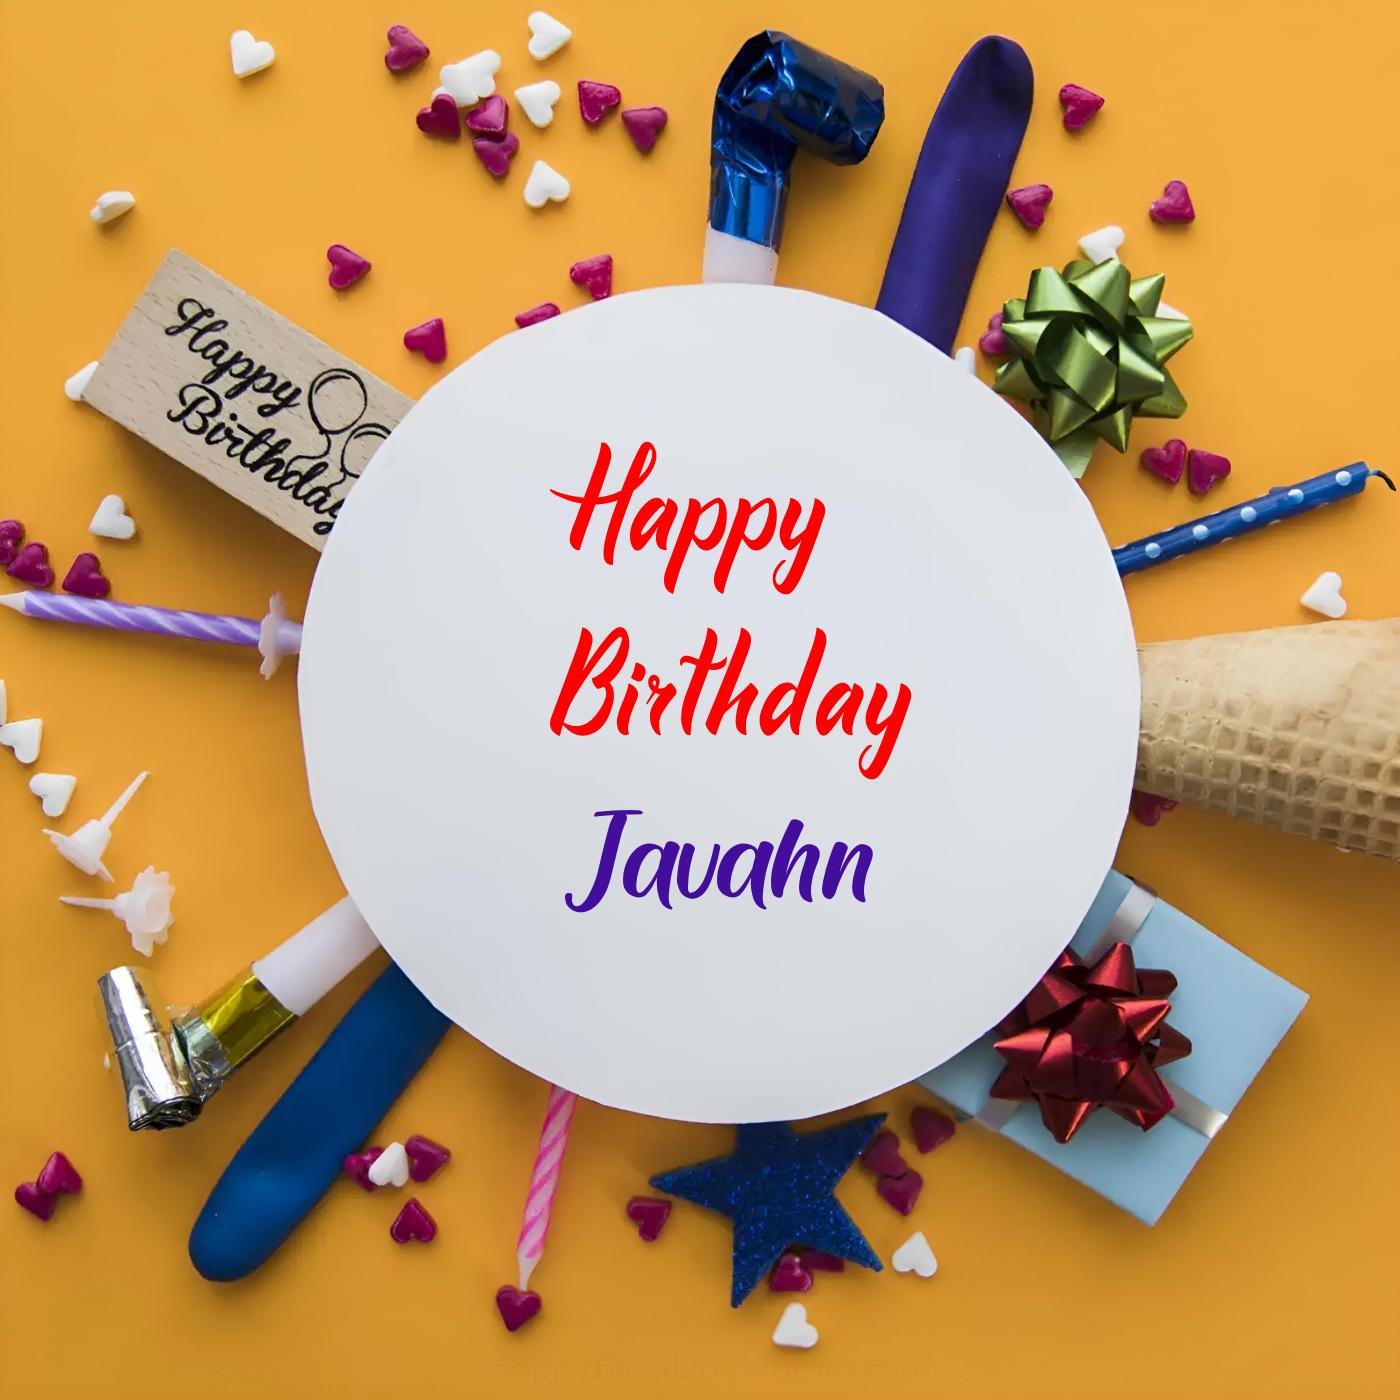 Happy Birthday Javahn Round Frame Card